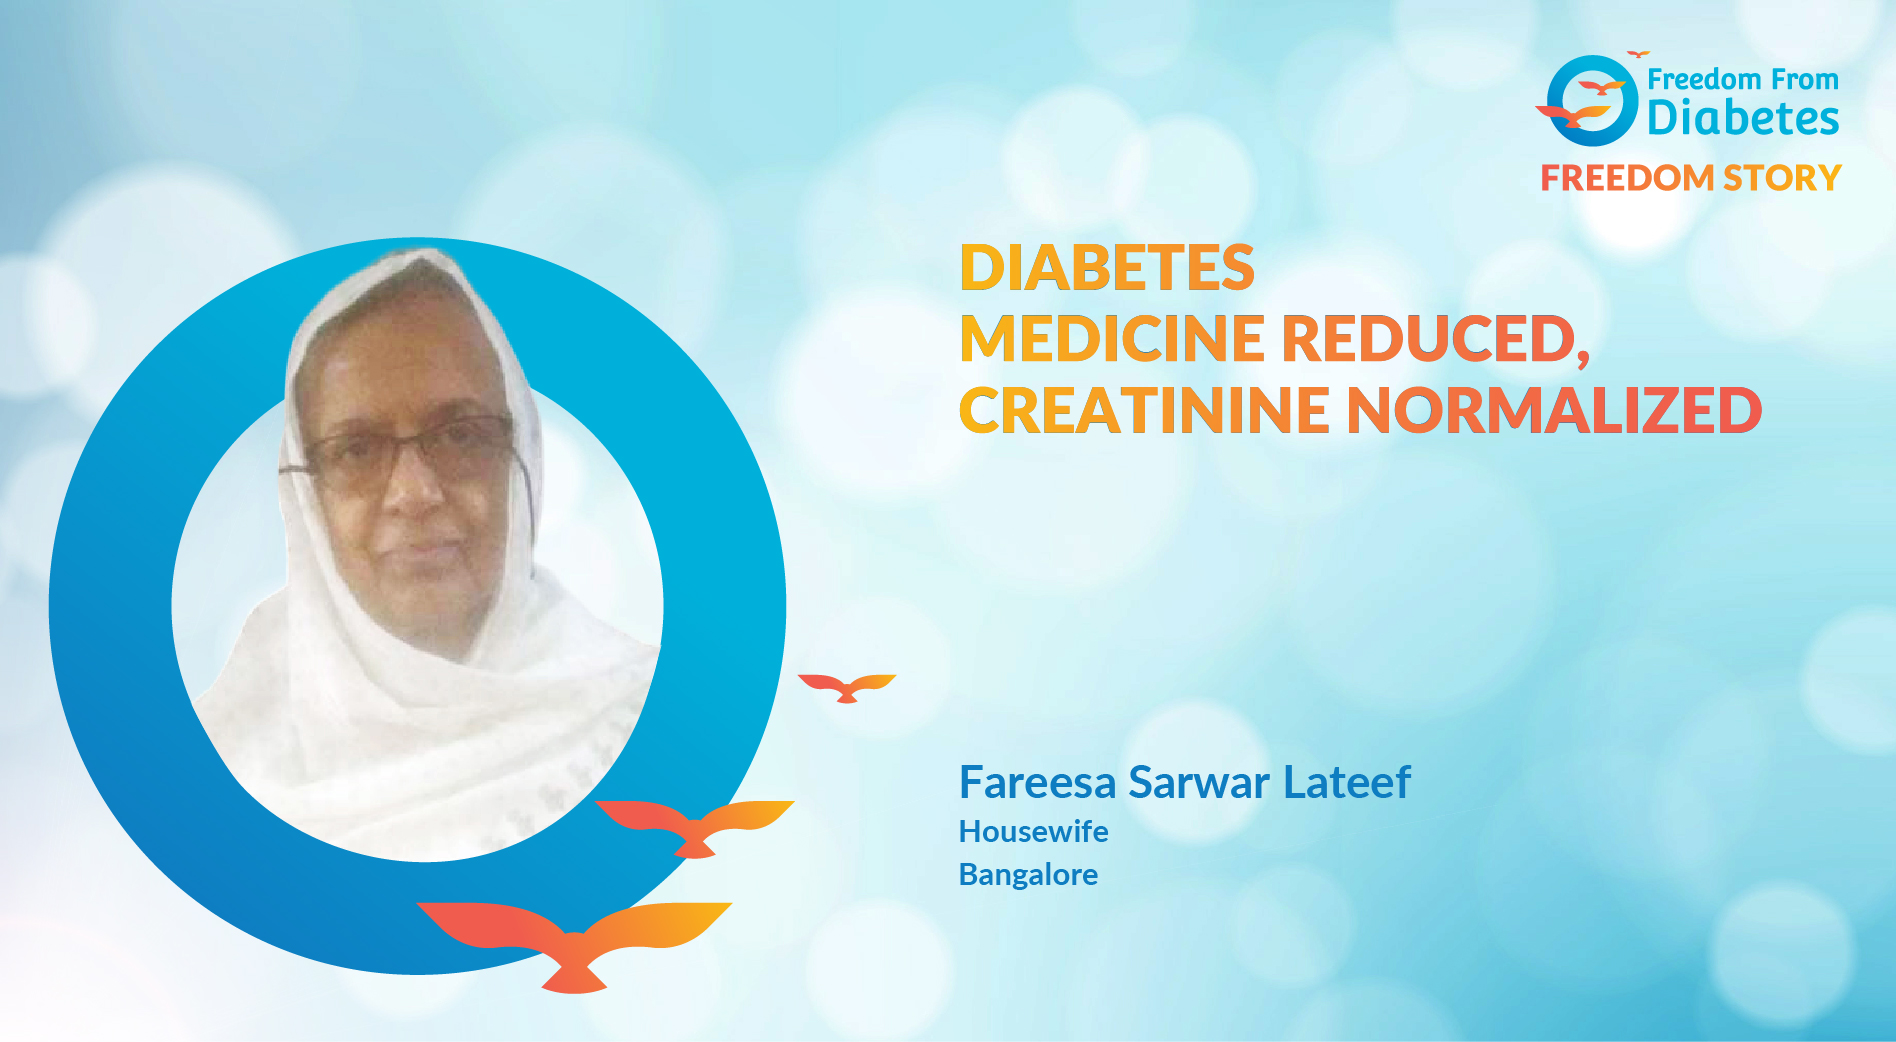 Fareesa Sarwar Lateef: Diabetes and co-morbidity reversal story